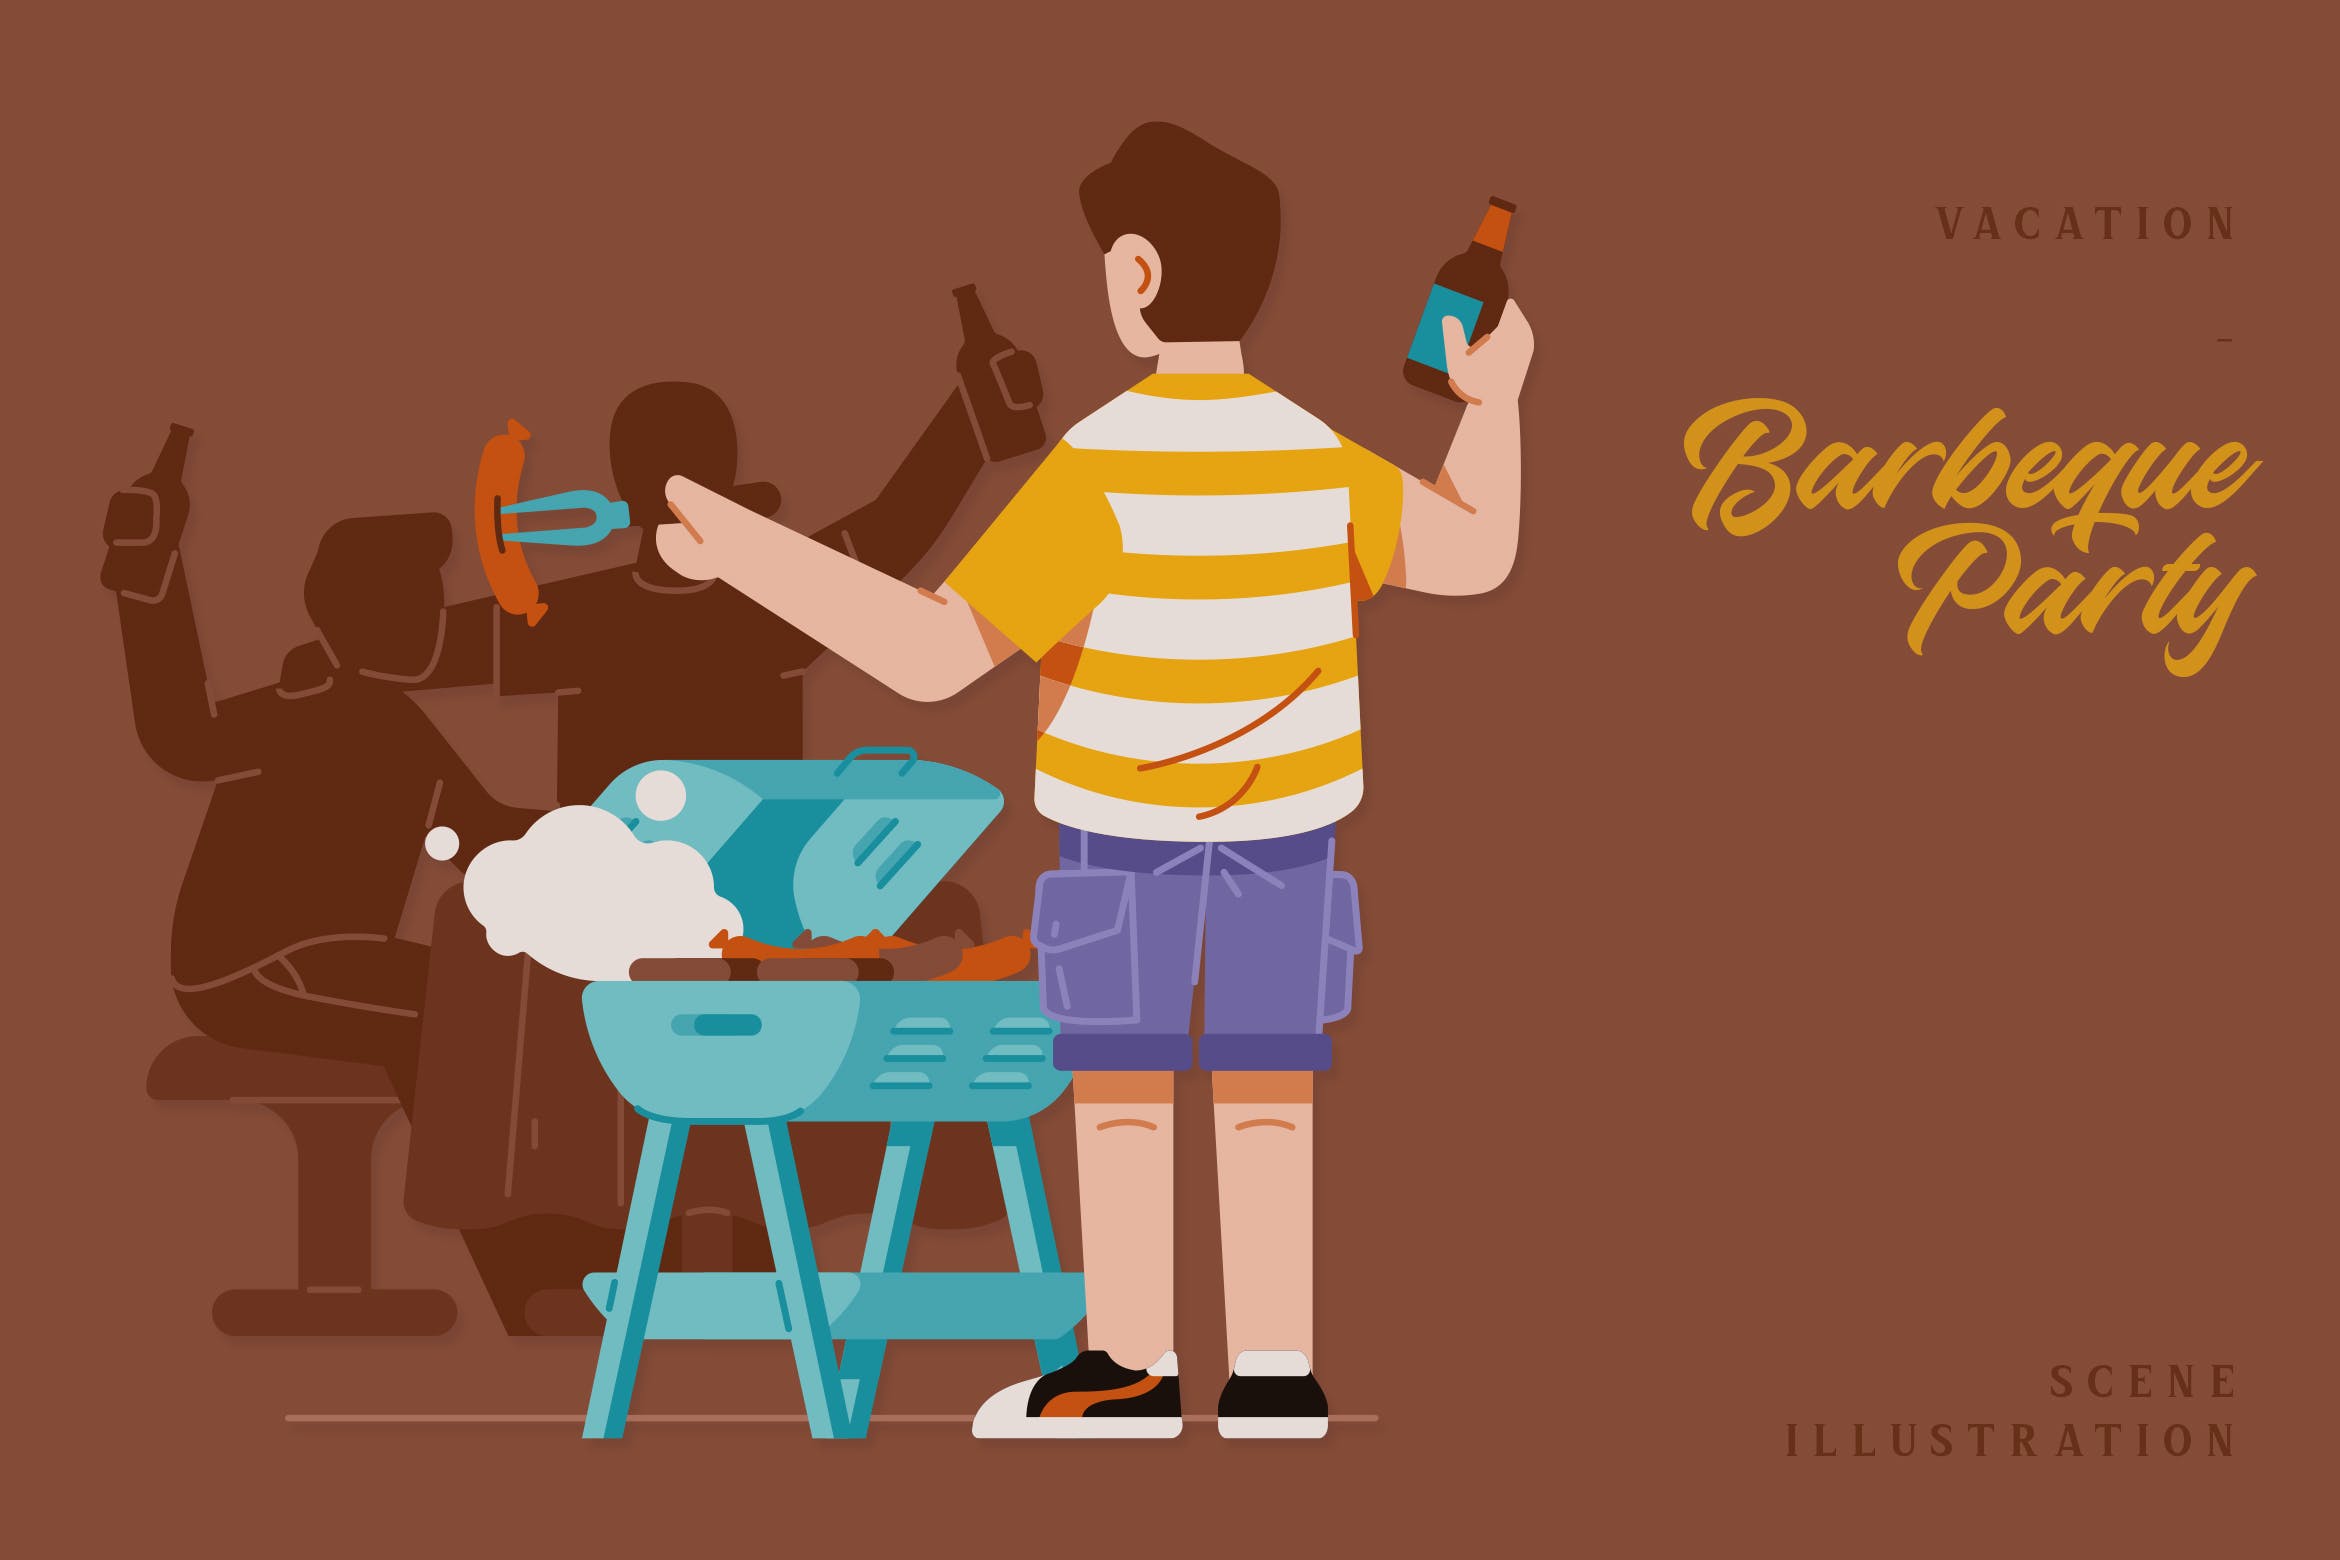 假期烧烤聚会场景插画矢量素材 Vacation – Barbeque Party Scene Illustration 图片素材 第1张